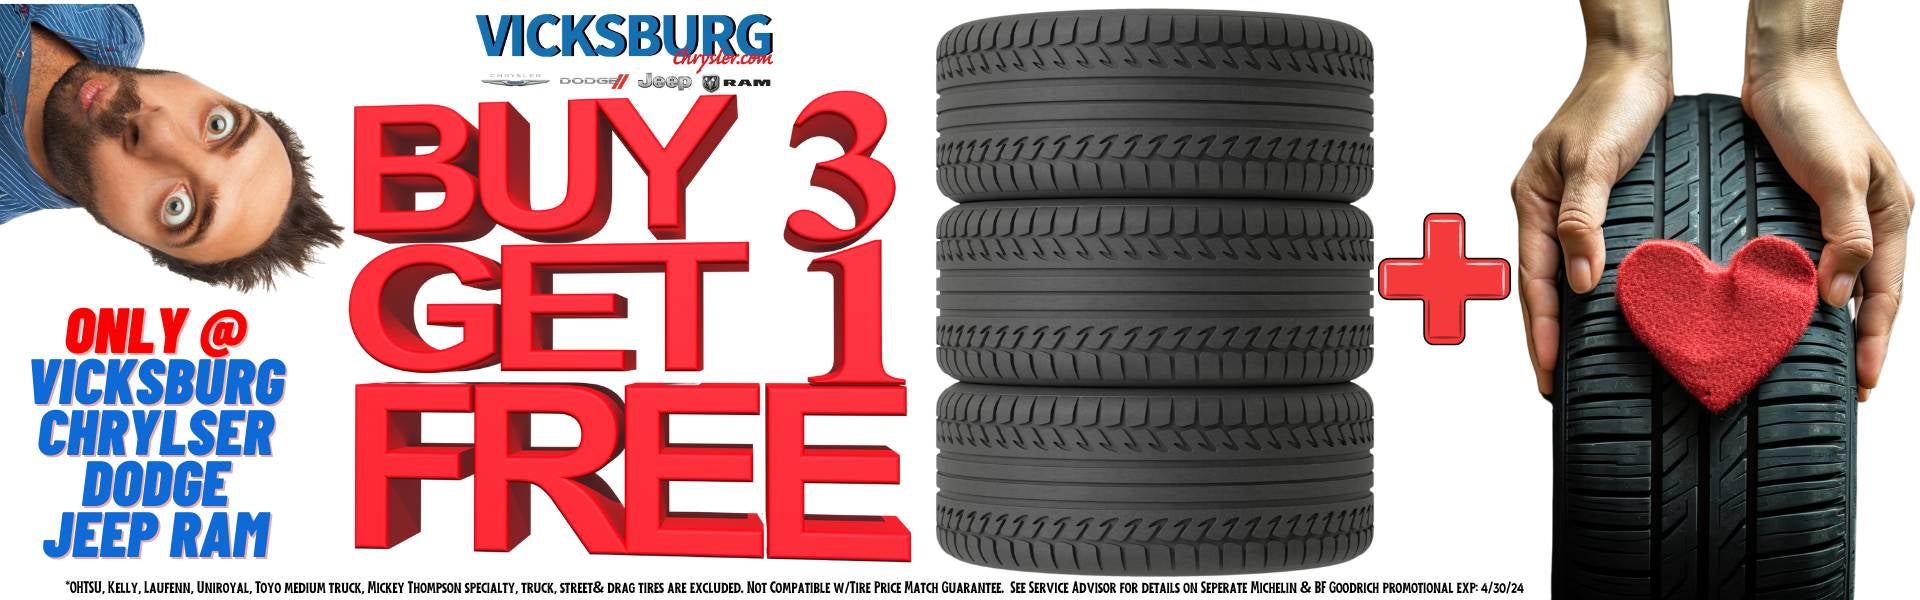  Buy 3 get 1 free on tires